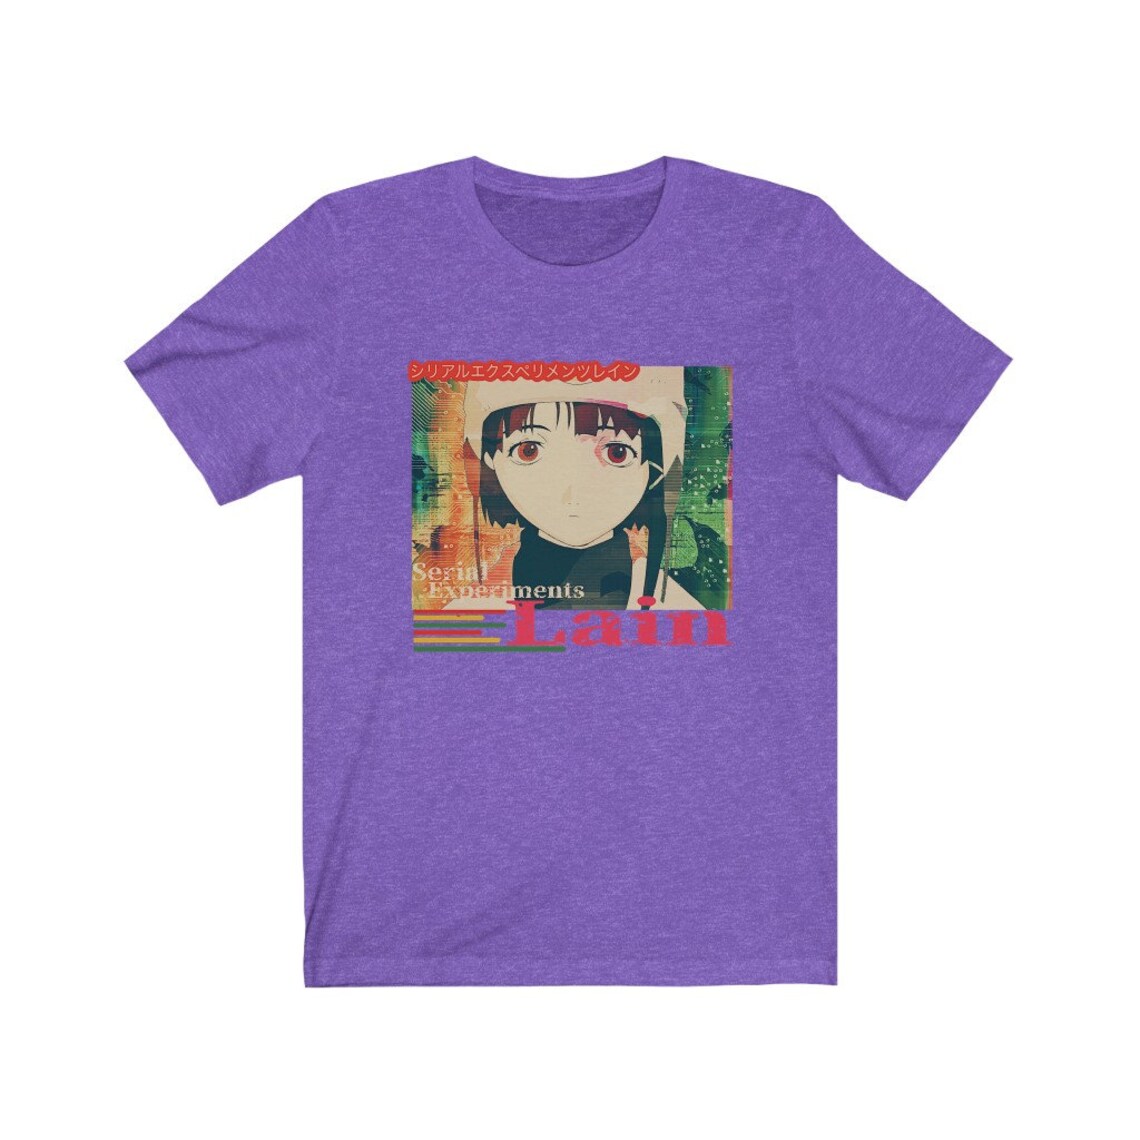 Unisex T-shirt Serial Experiments Lain Tee-shirt Anime | Etsy